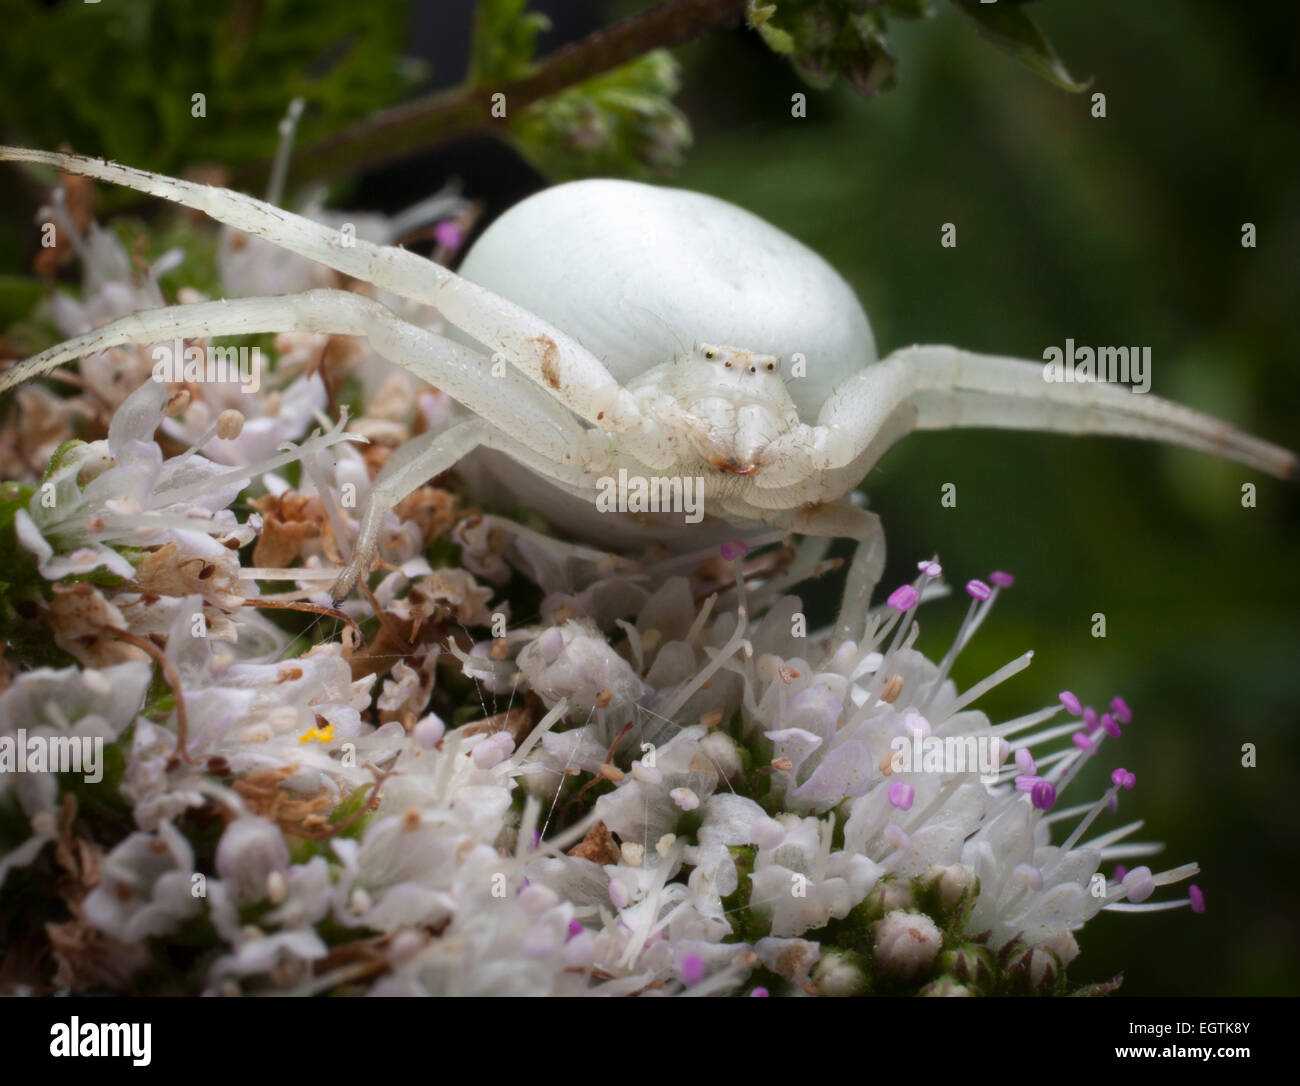 A white crab-spider (Arachnida,Araneae,Thomisidiae), lurking in a mint flower. Stock Photo